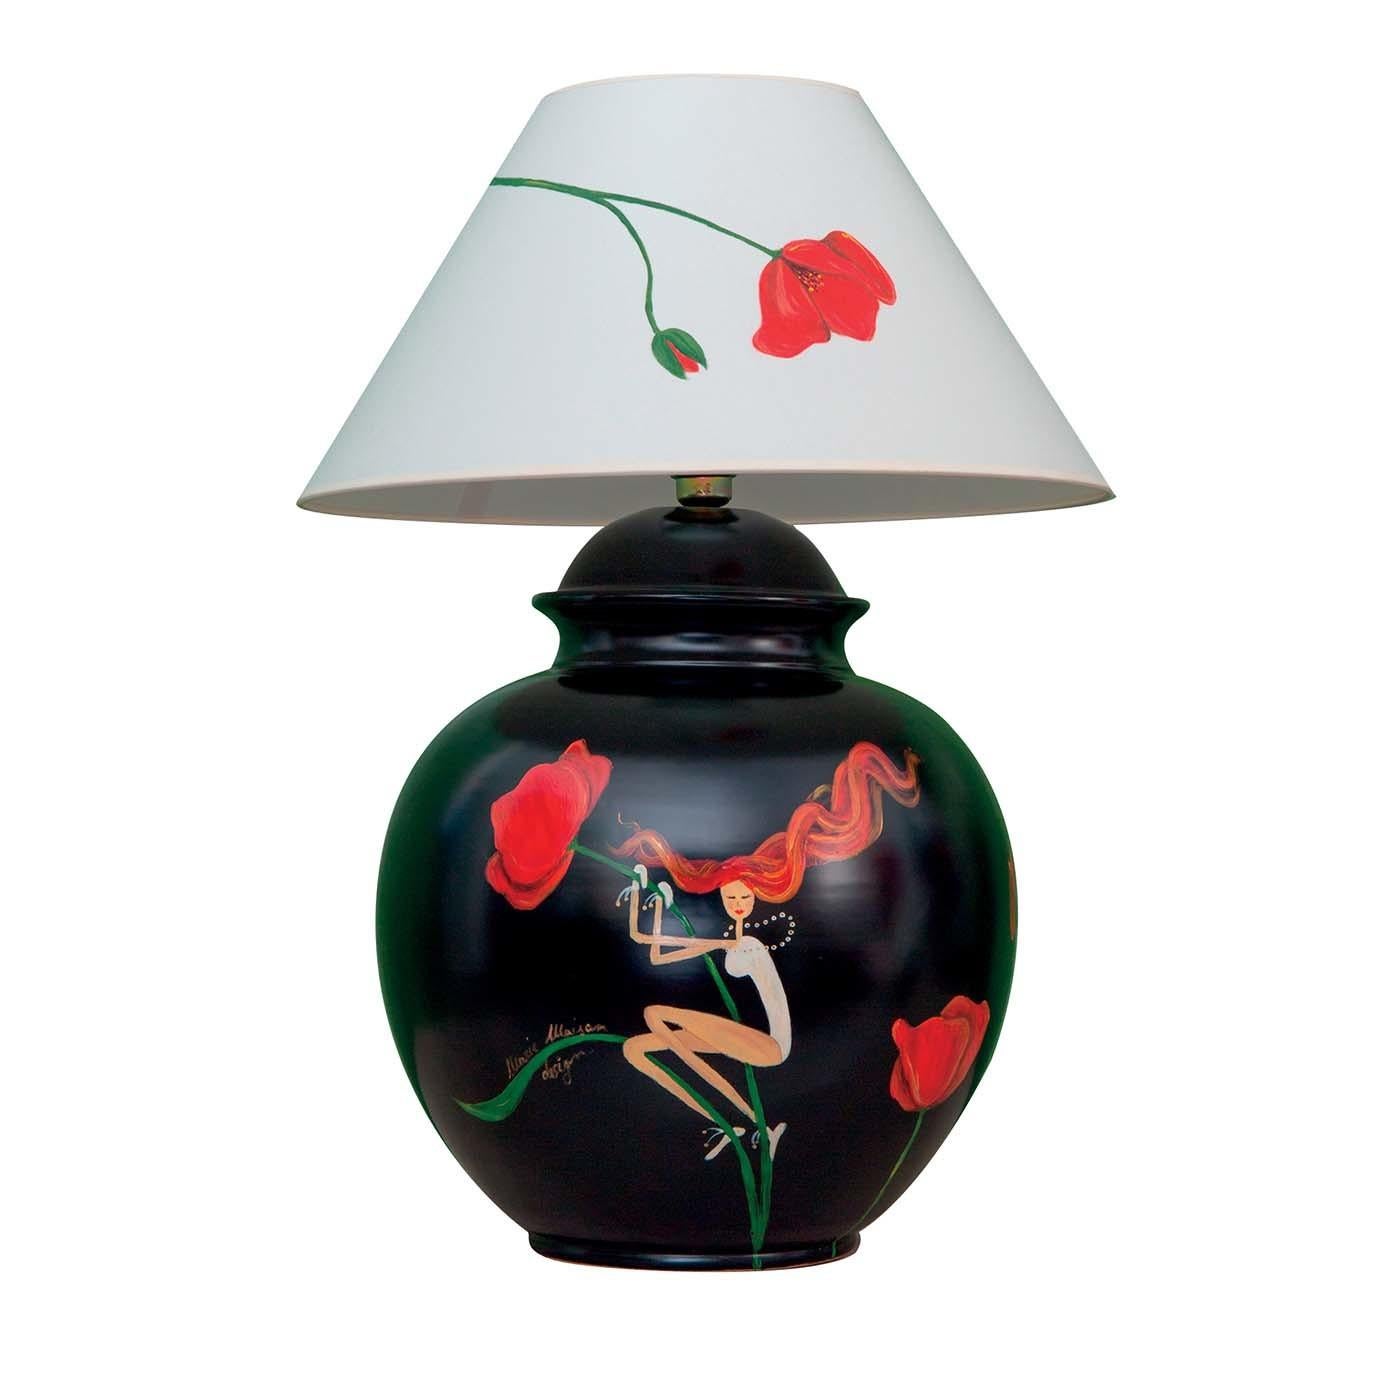 Italian Black Table Lamp For Sale